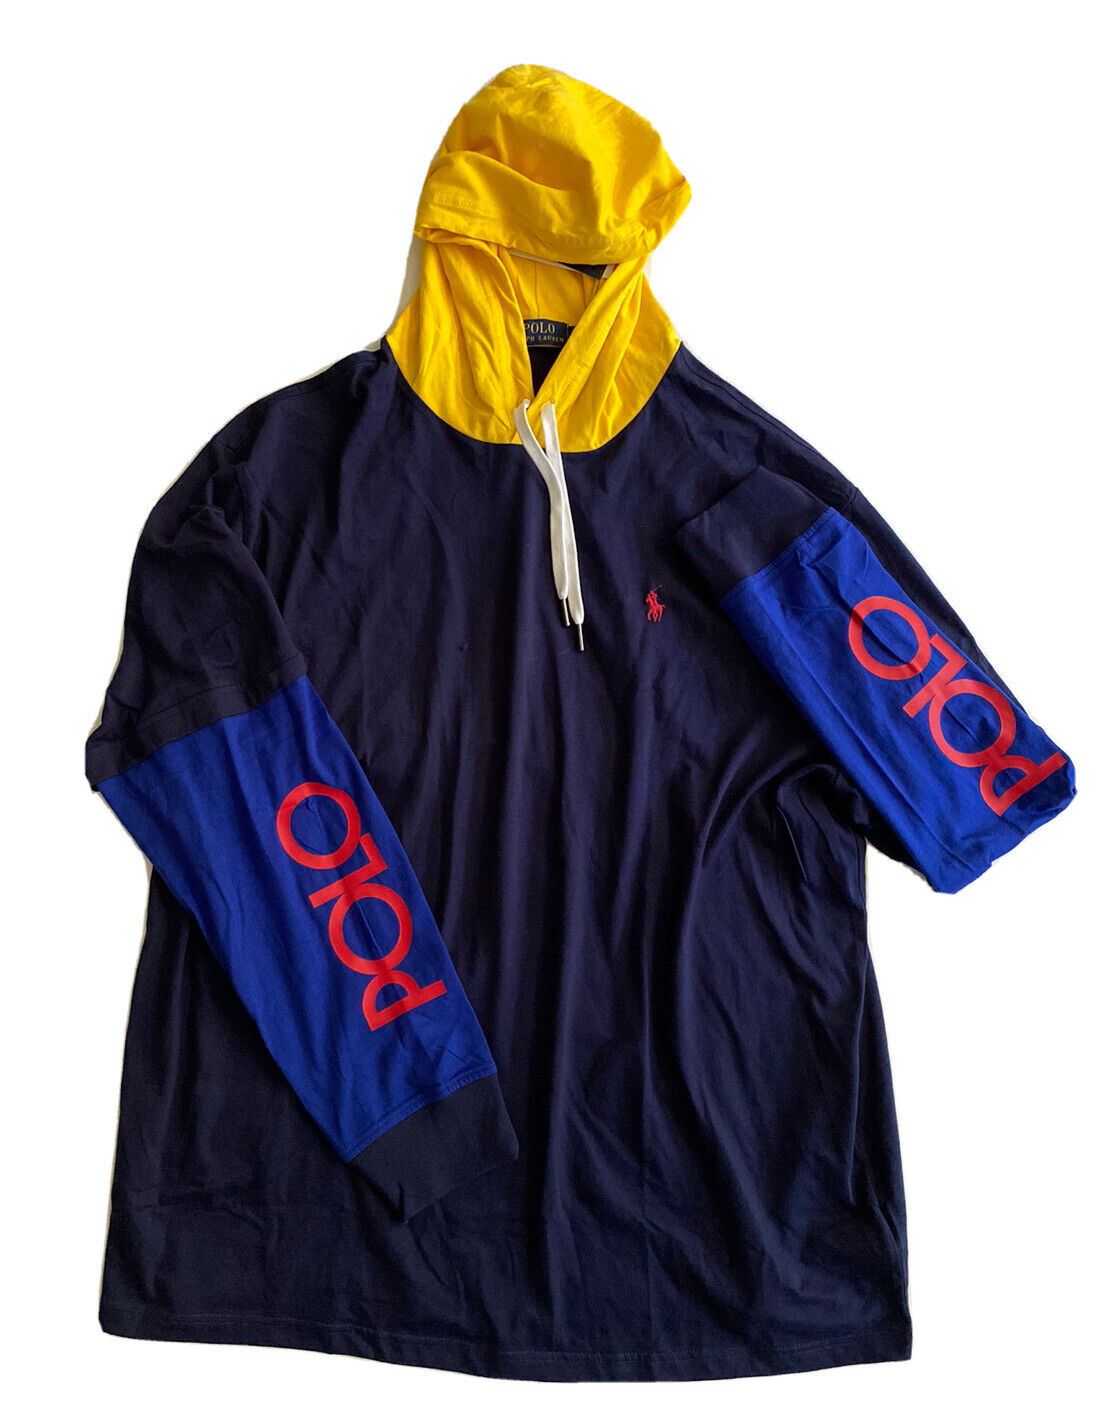 Neu mit Etikett: Polo Ralph Lauren Langarm-Sweatshirt mit Signature-Logo, Marineblau, 2XL 